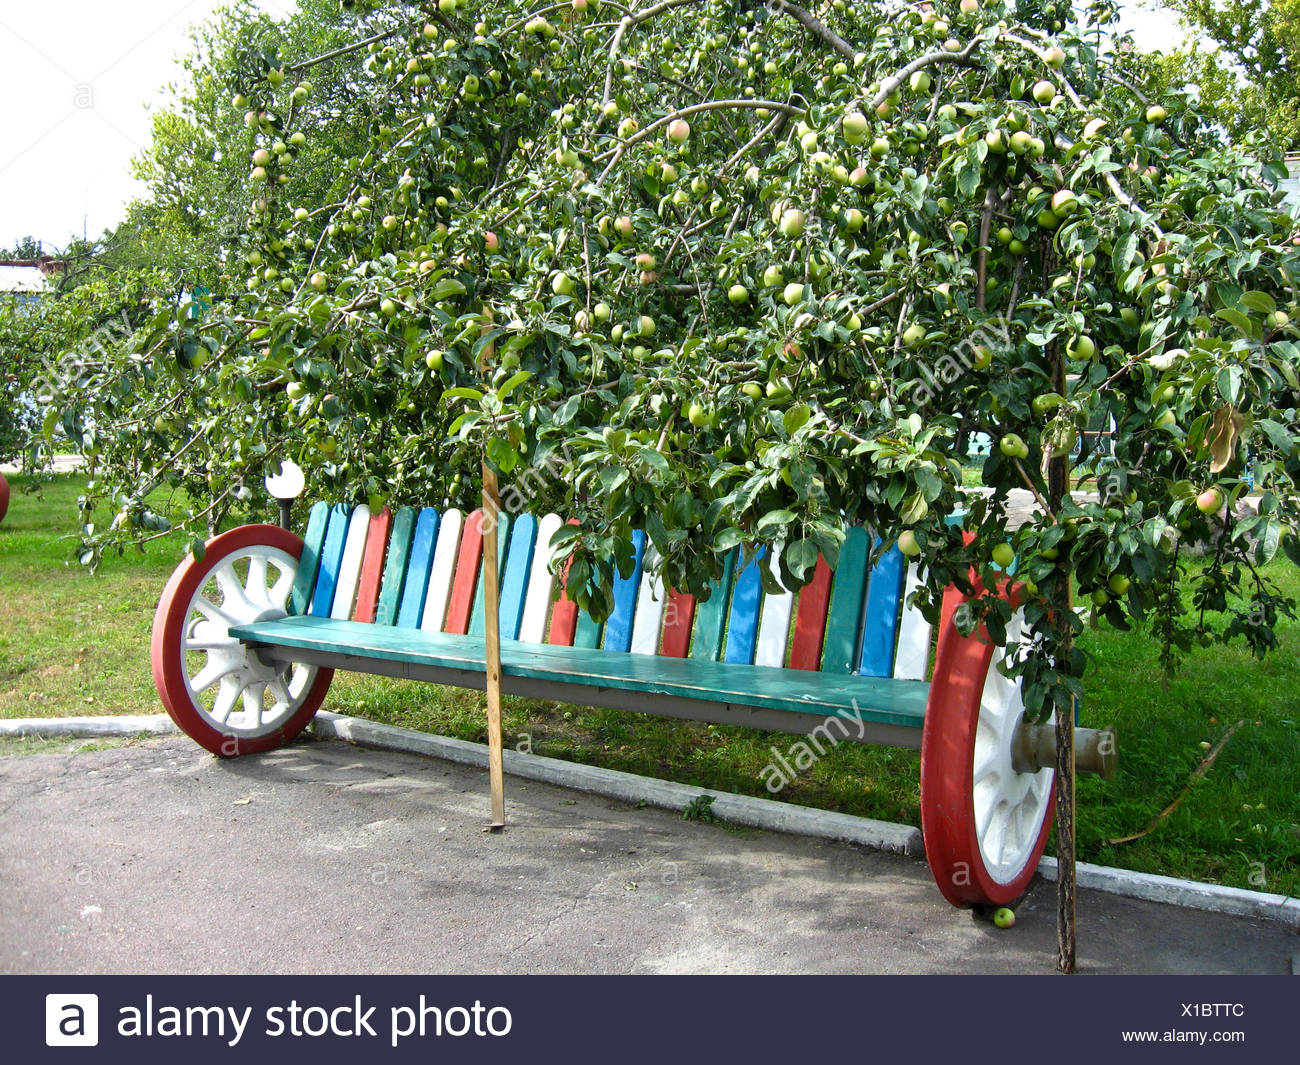 Tree Garden Wheels Original Seat Bench Lawn Green Apple